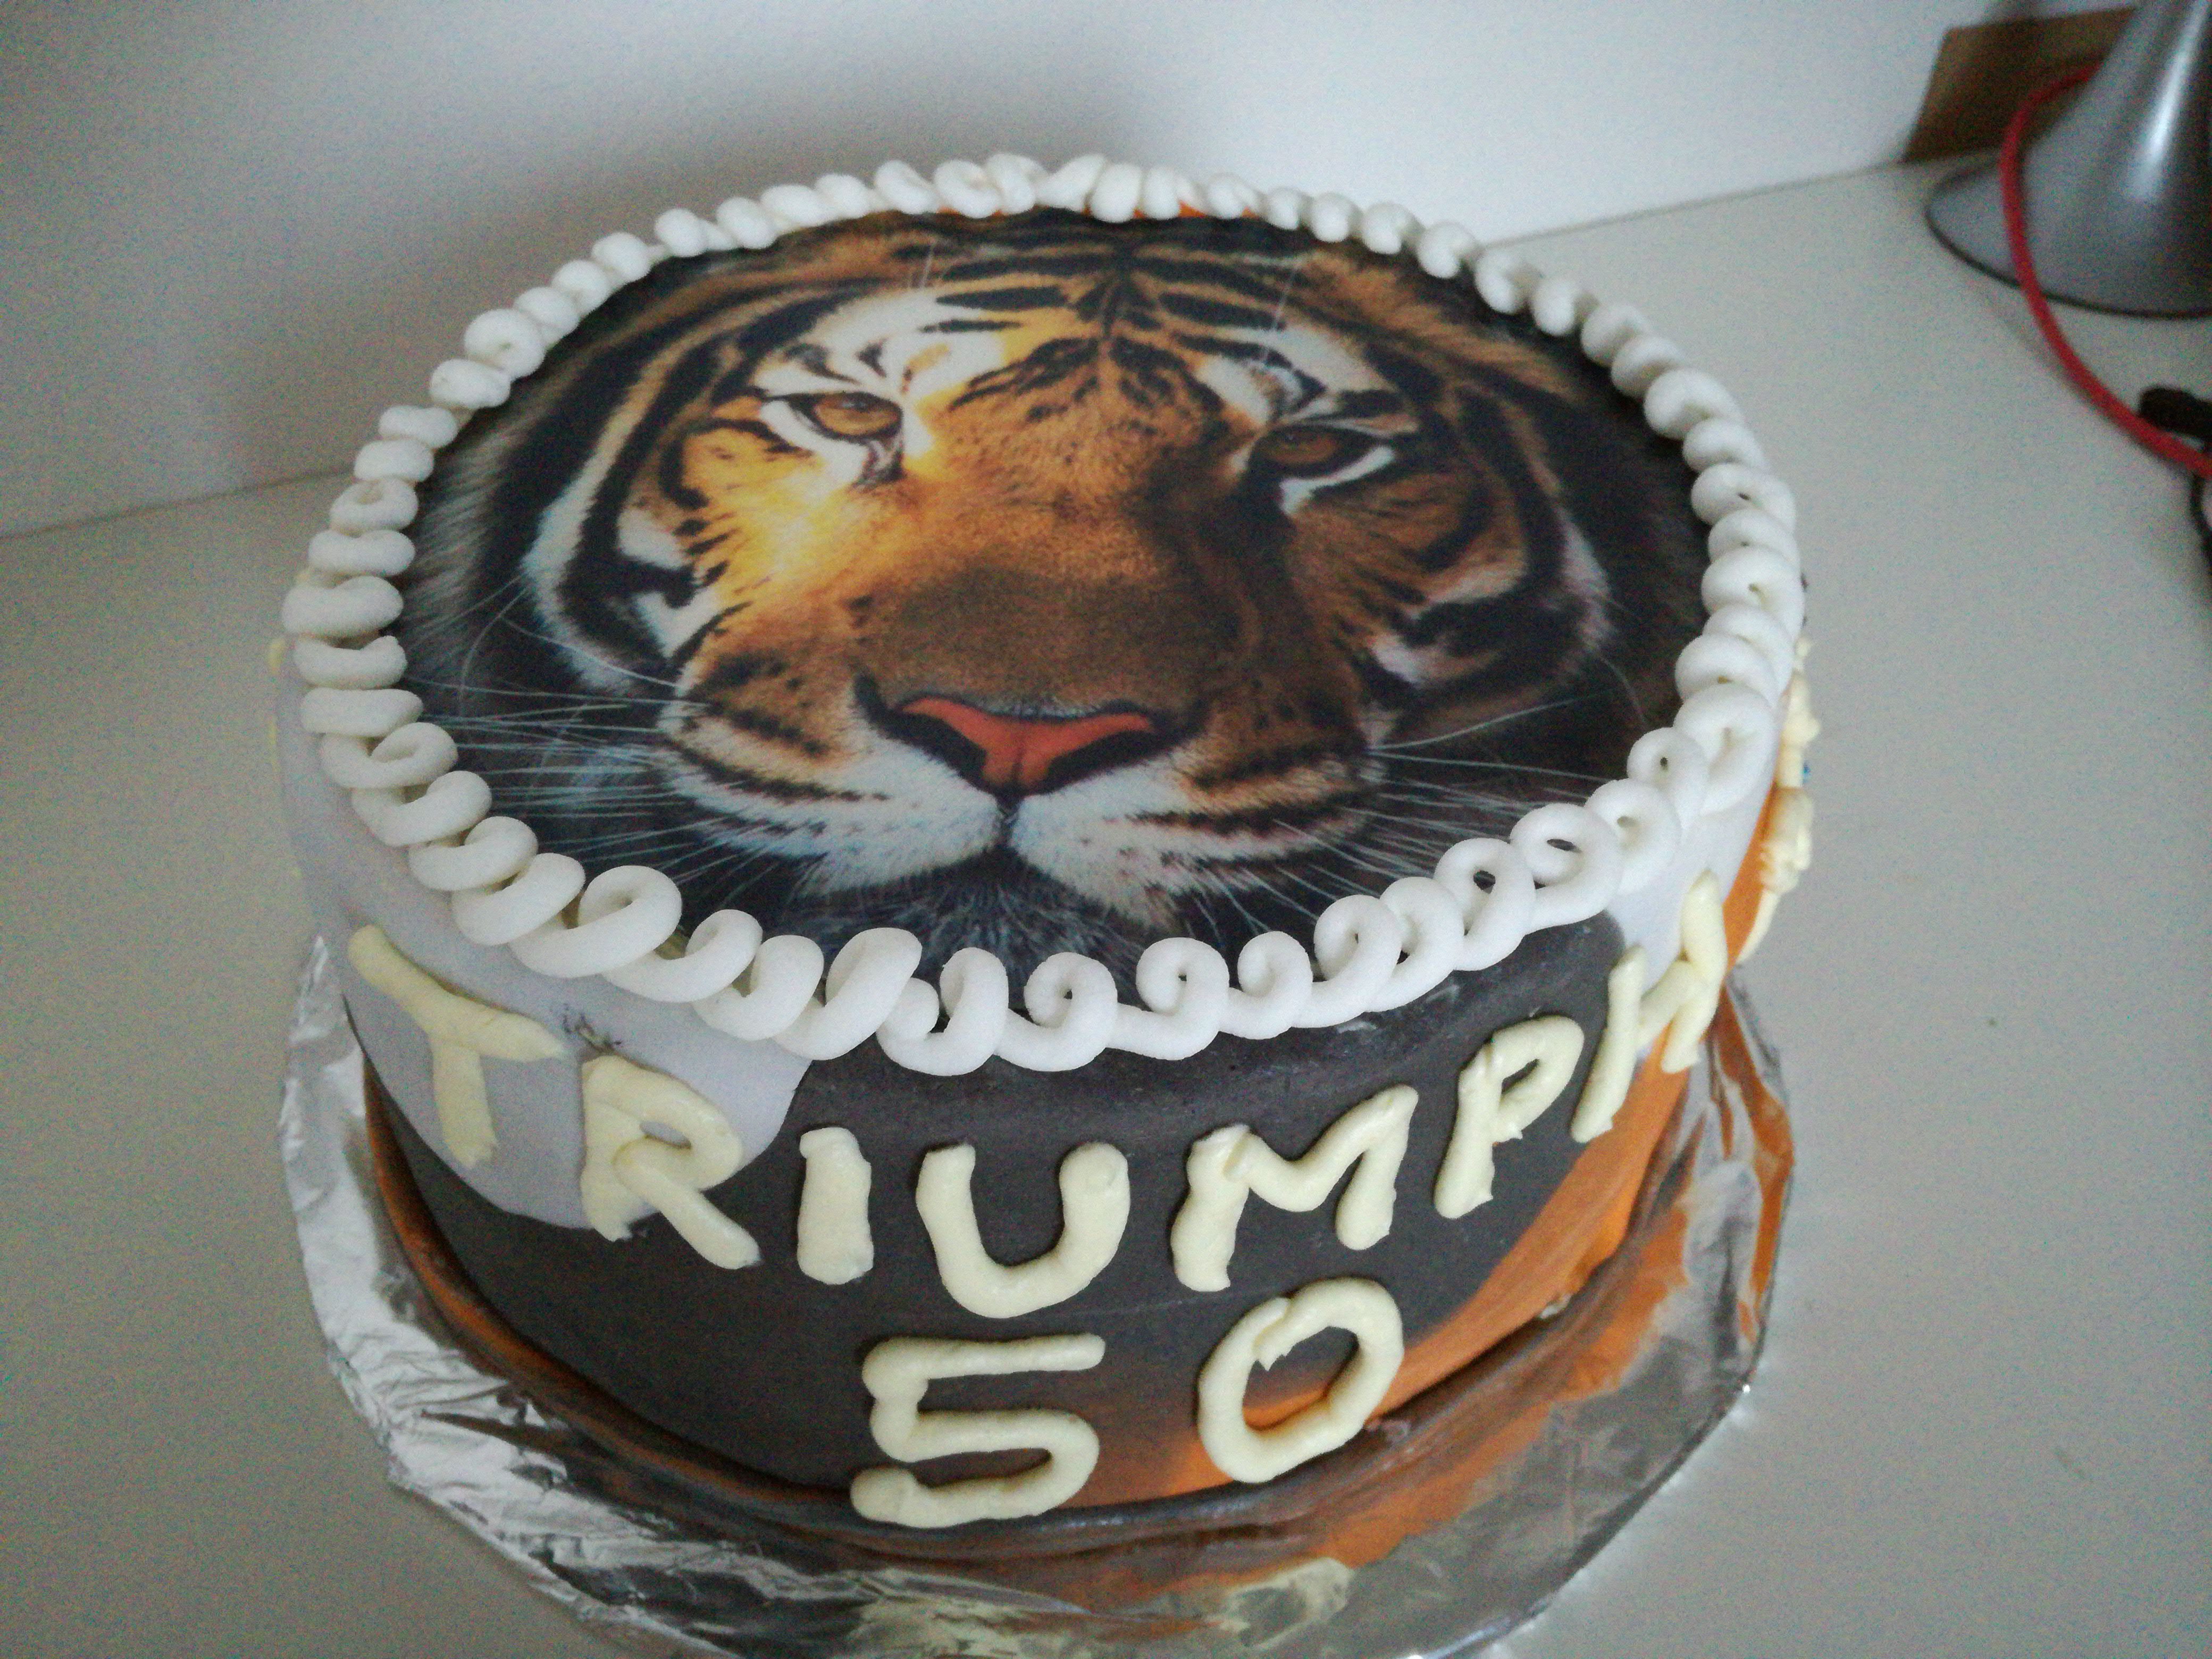 10. Hotový dort s tygrem